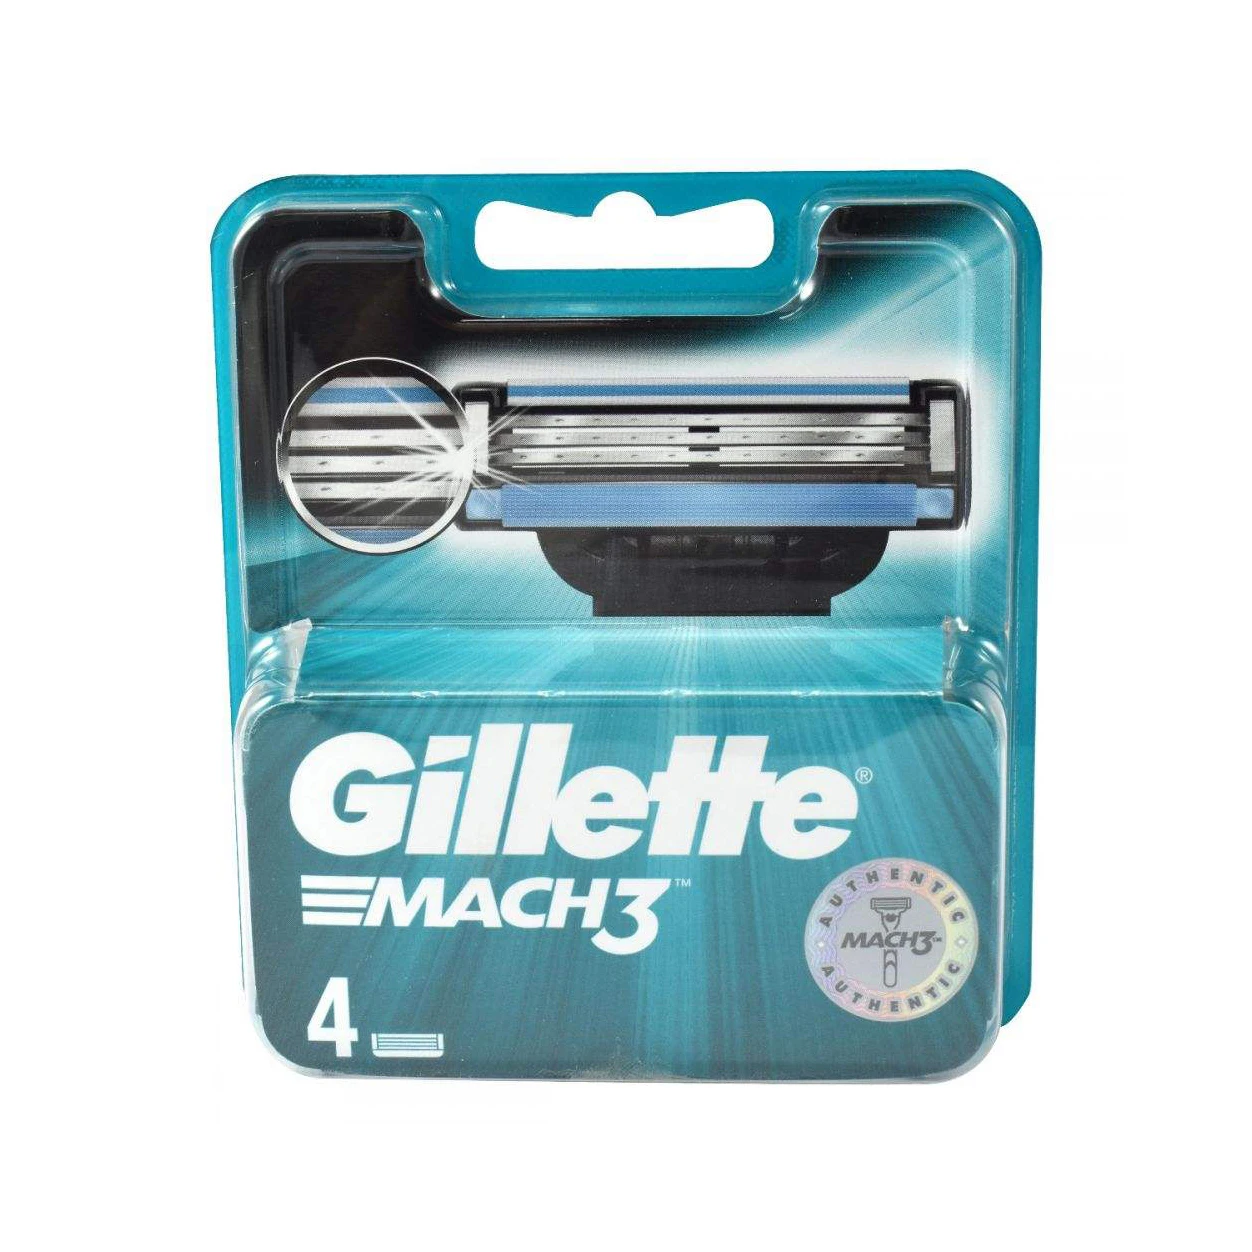 Hot Sale Gillette Fusion5 Razor Blades, 8 Blade,gillette mach 3 razor blades Refills wholesale